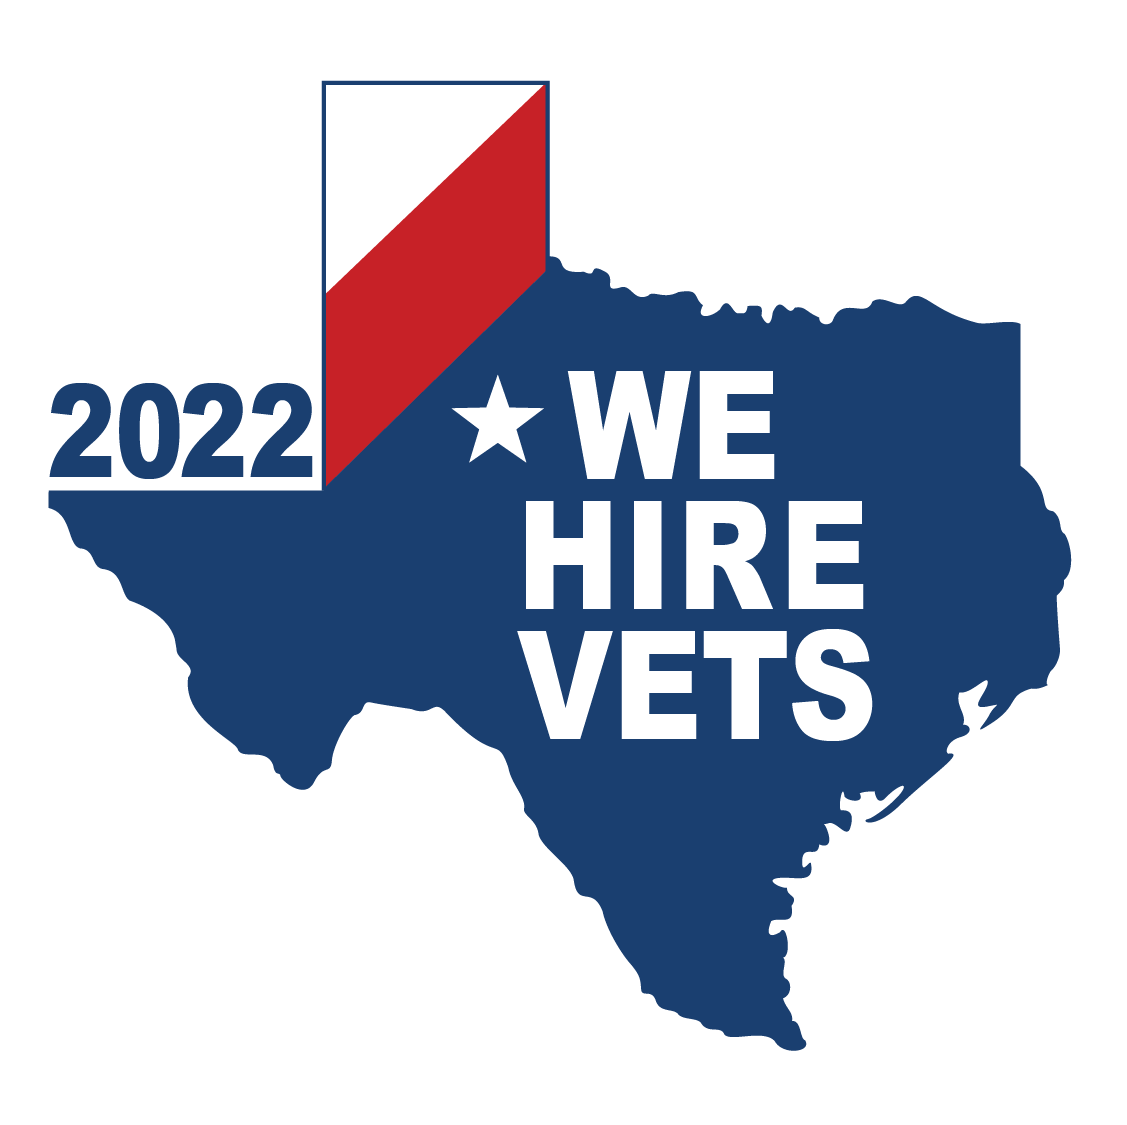 We hire vets 2022 logo